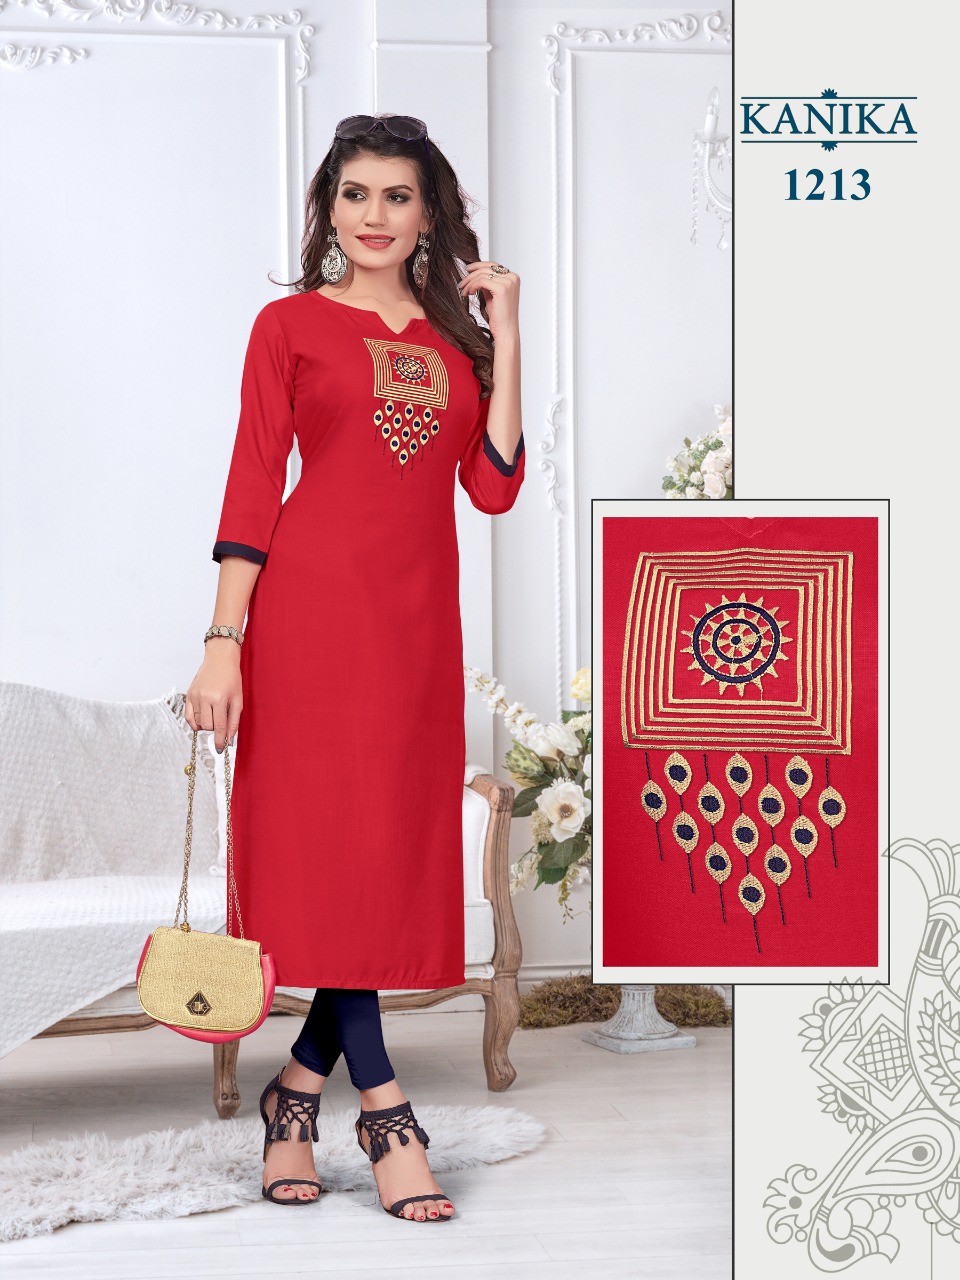 Kanika Aditi vol-2 charming look Kurties in wholesale prices